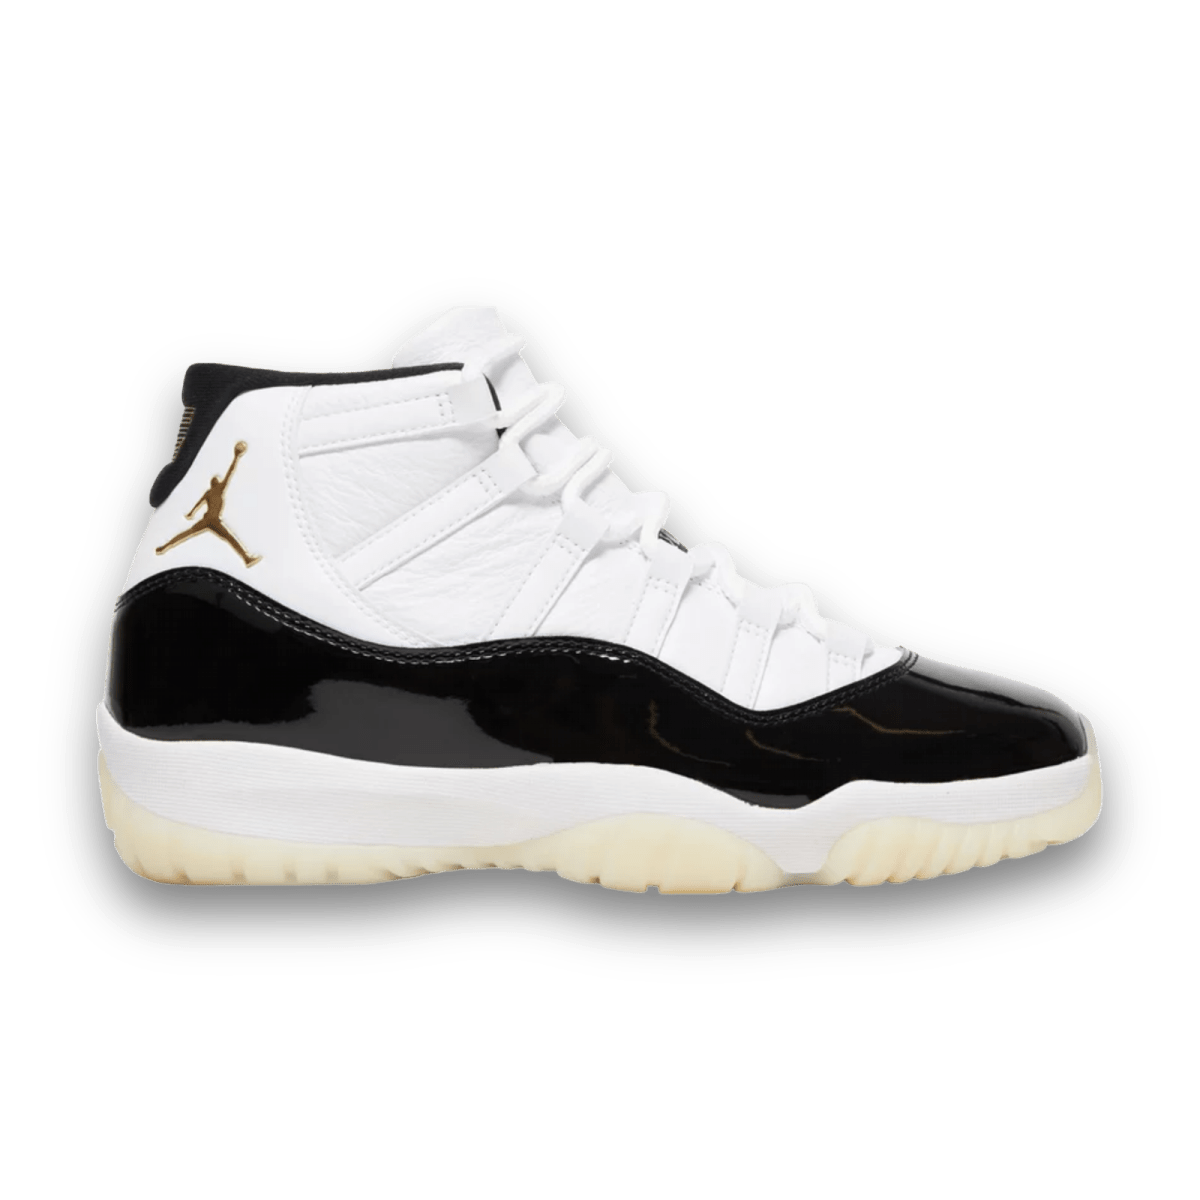 Air Jordan 11 Retro 'Gratitude / Defining Moments' - Unreleased - sneaker - High Sneaker - Jordan - Jawns on Fire